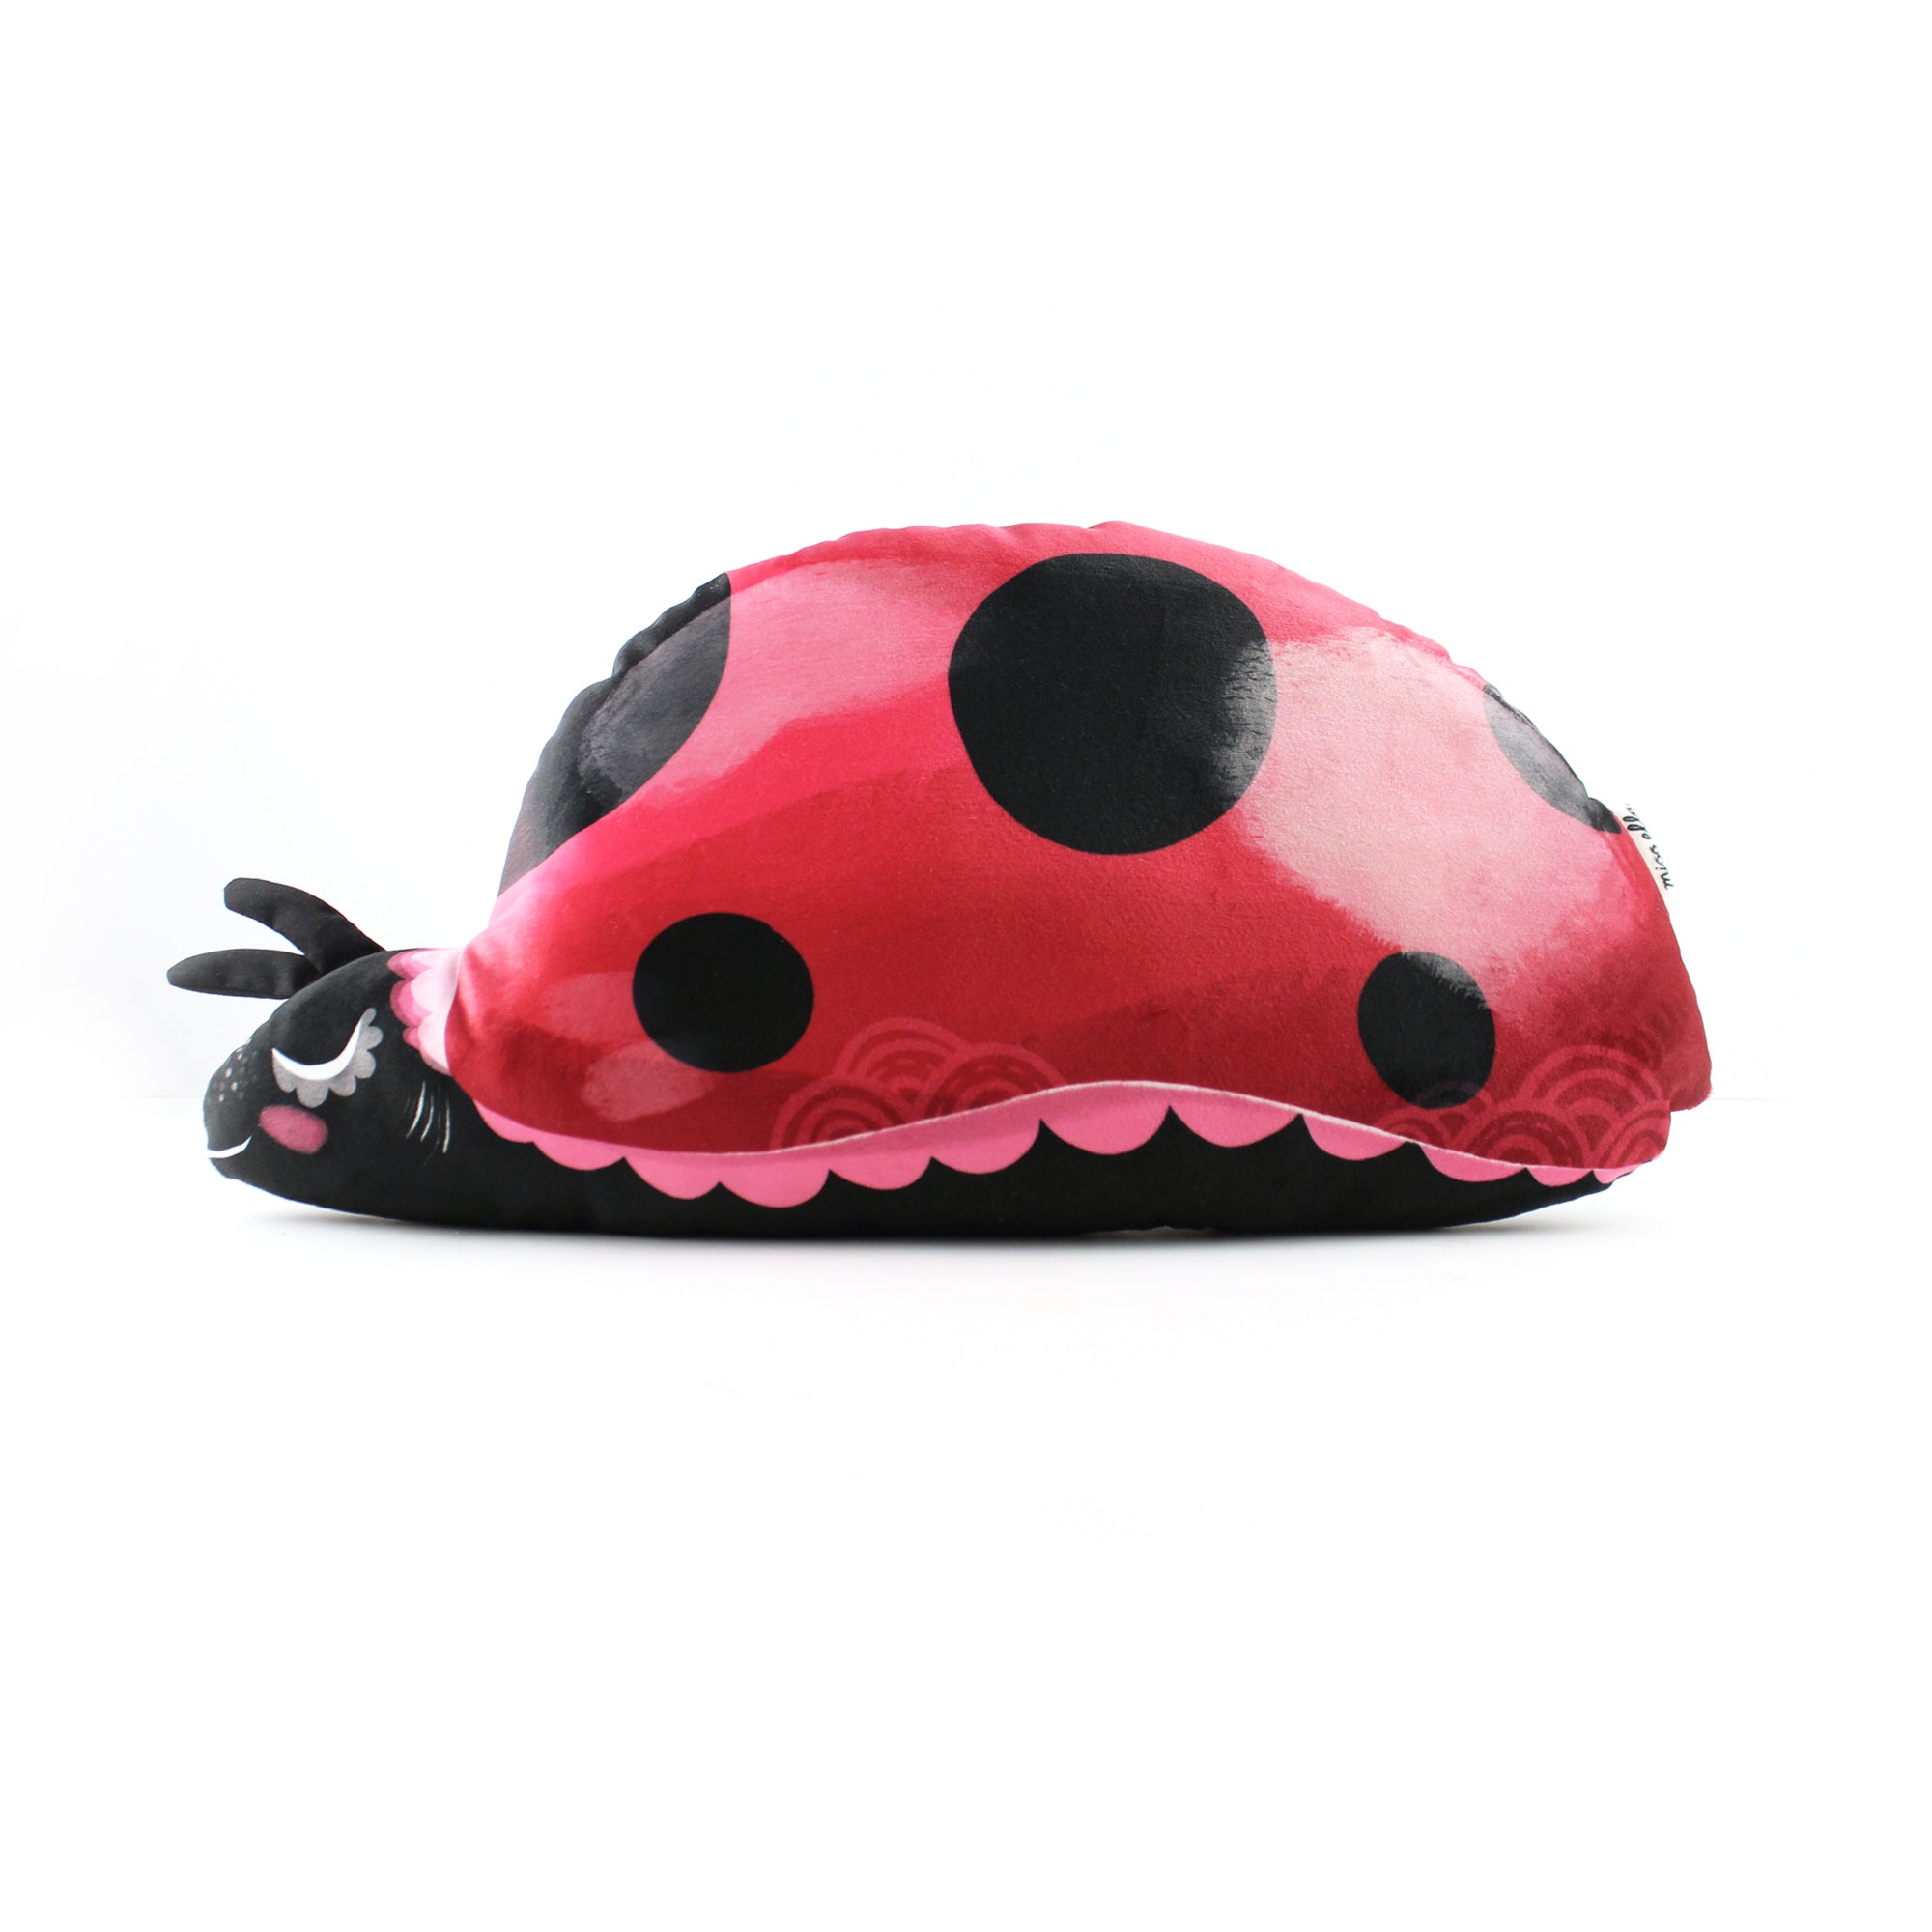 DIY sewing KIT - Baby Ladybird Cushion